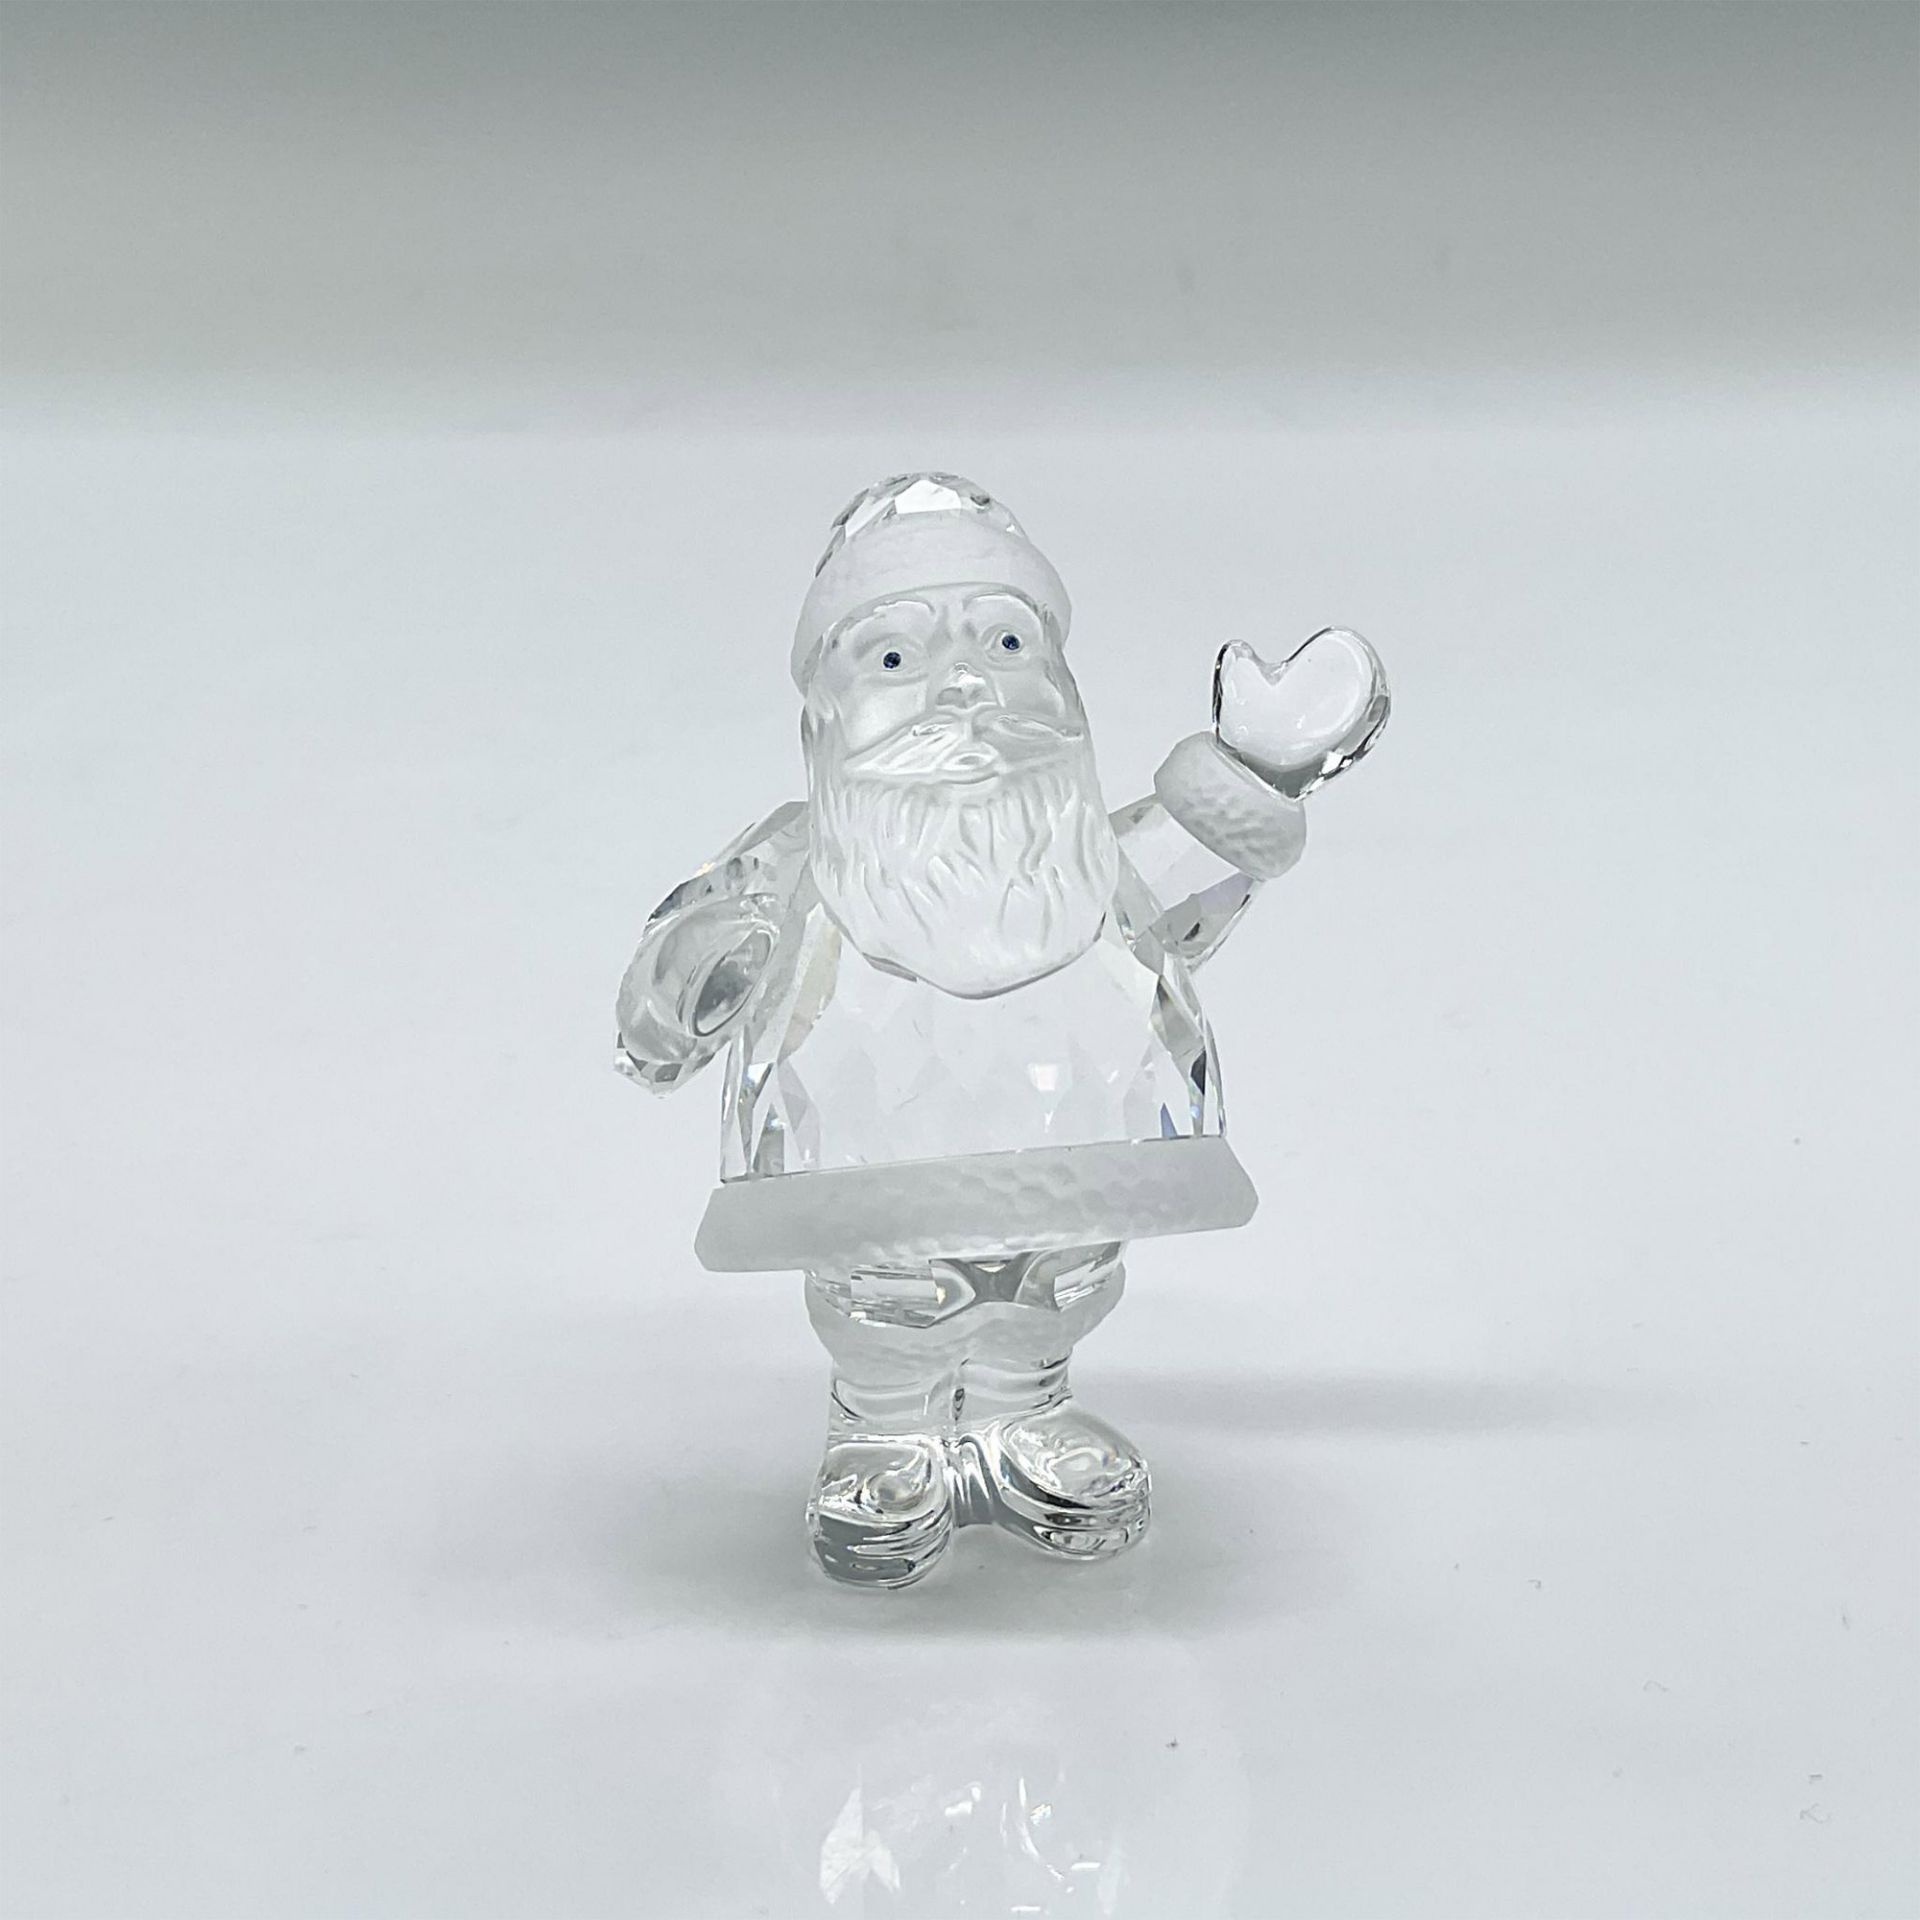 Swarovski Silver Crystal Figurine, Santa Claus